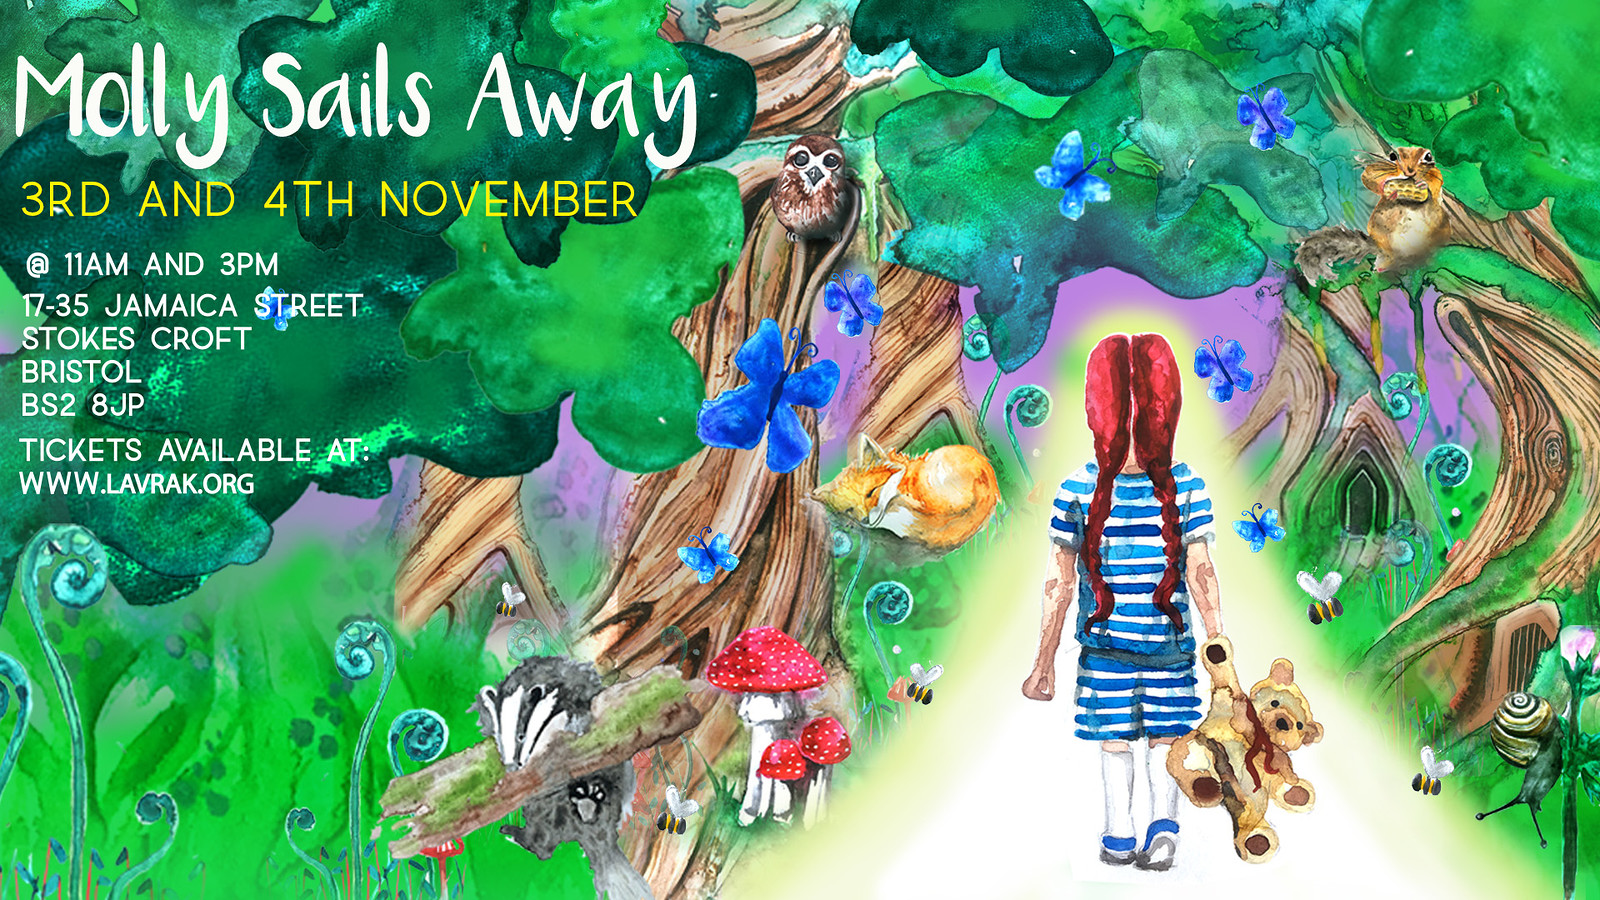 Molly Sails Away - A Narrative Family Circus Show at PRSC